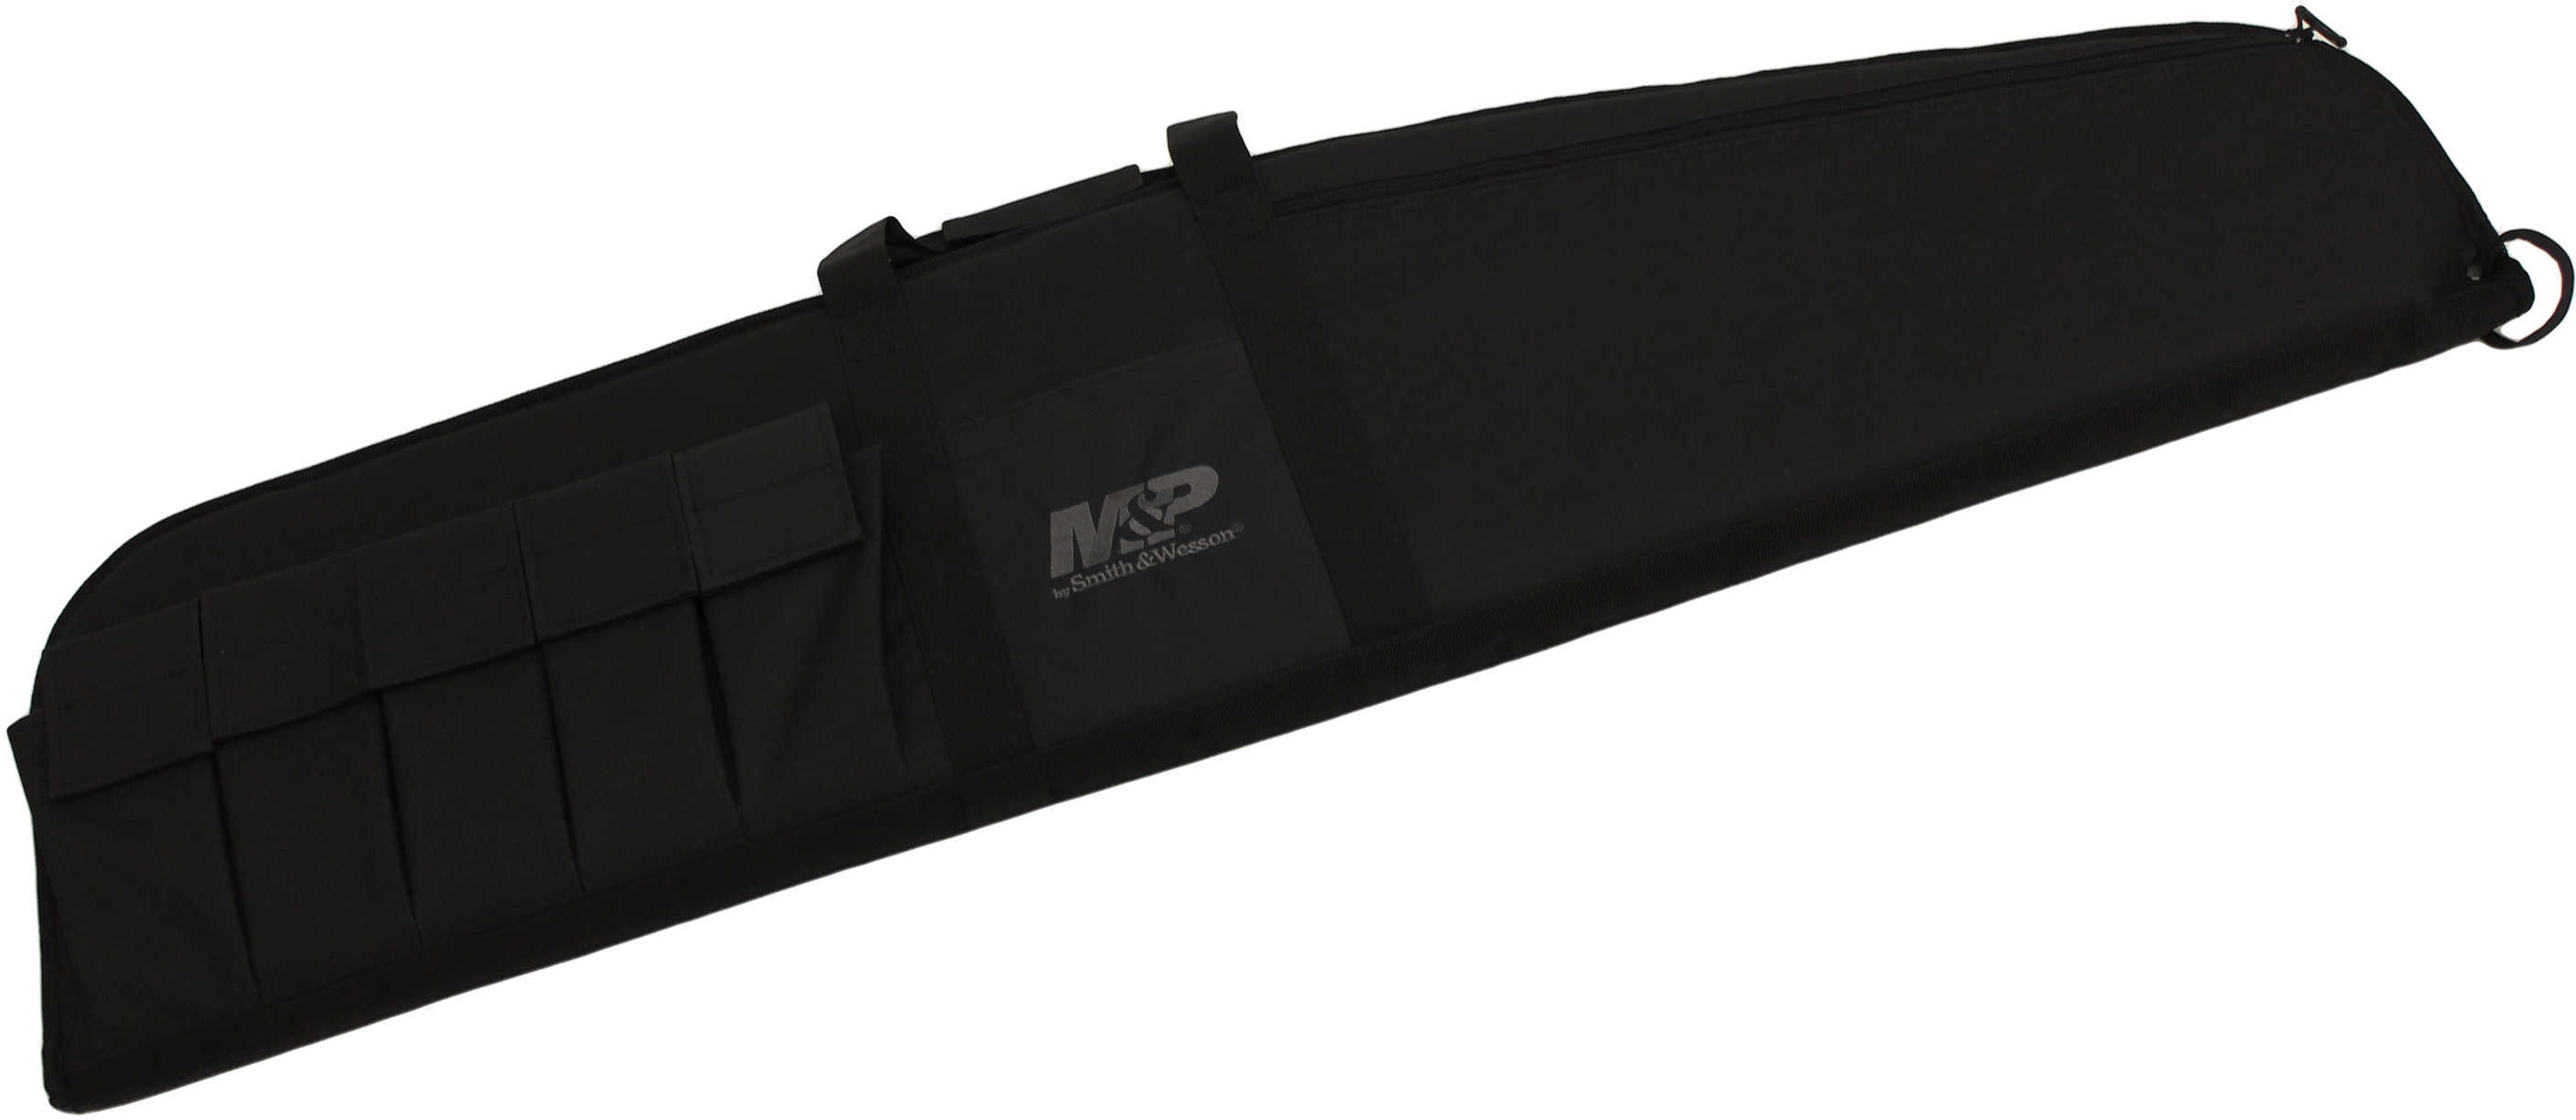 Accessories Duty Series Gun Case Large, Black Md: 110016